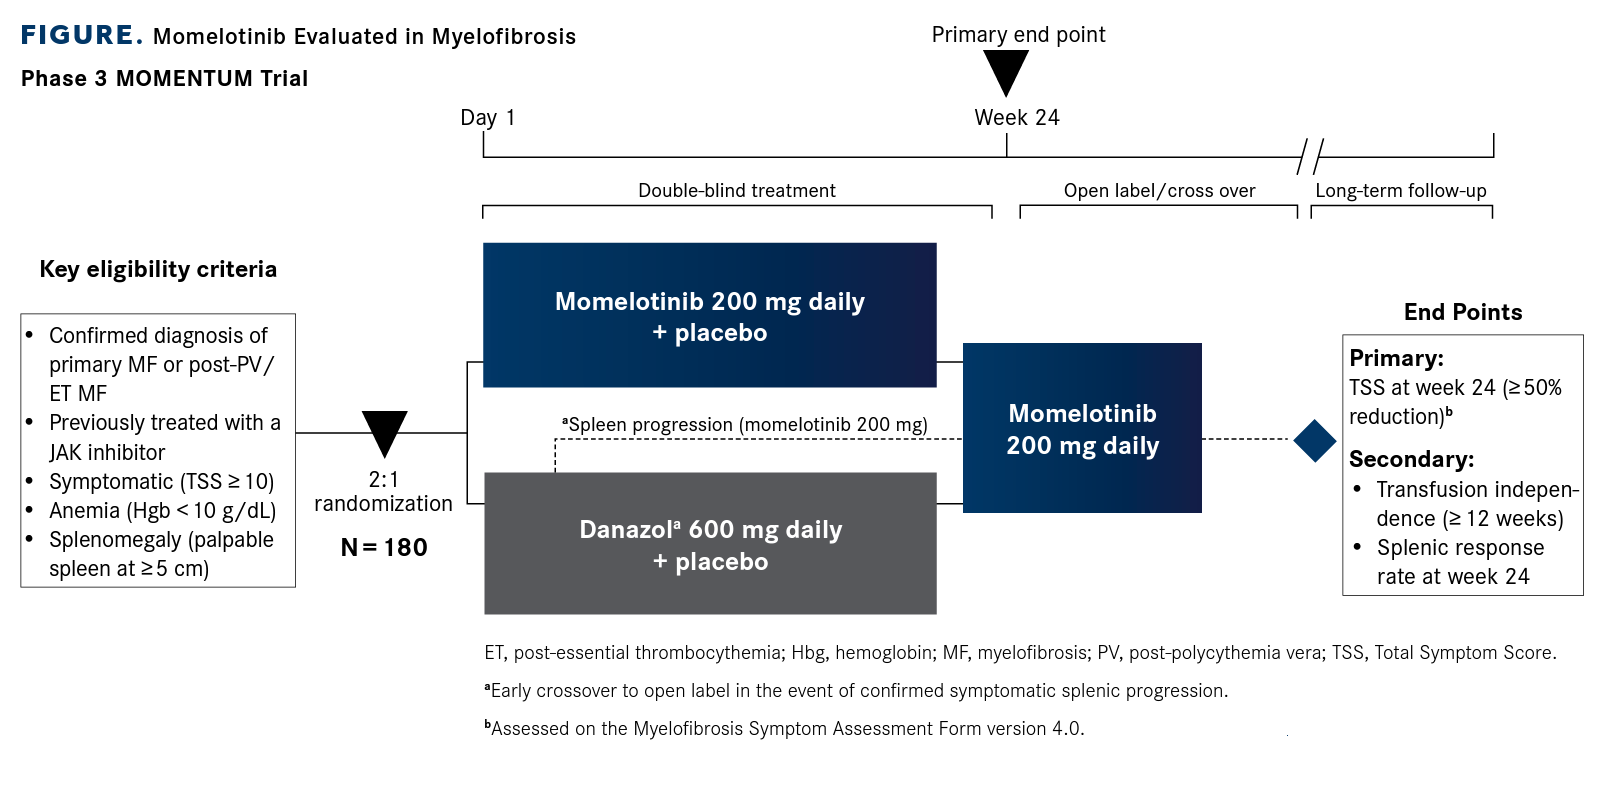 Momelotinib Evaluated in Myelofibrosis